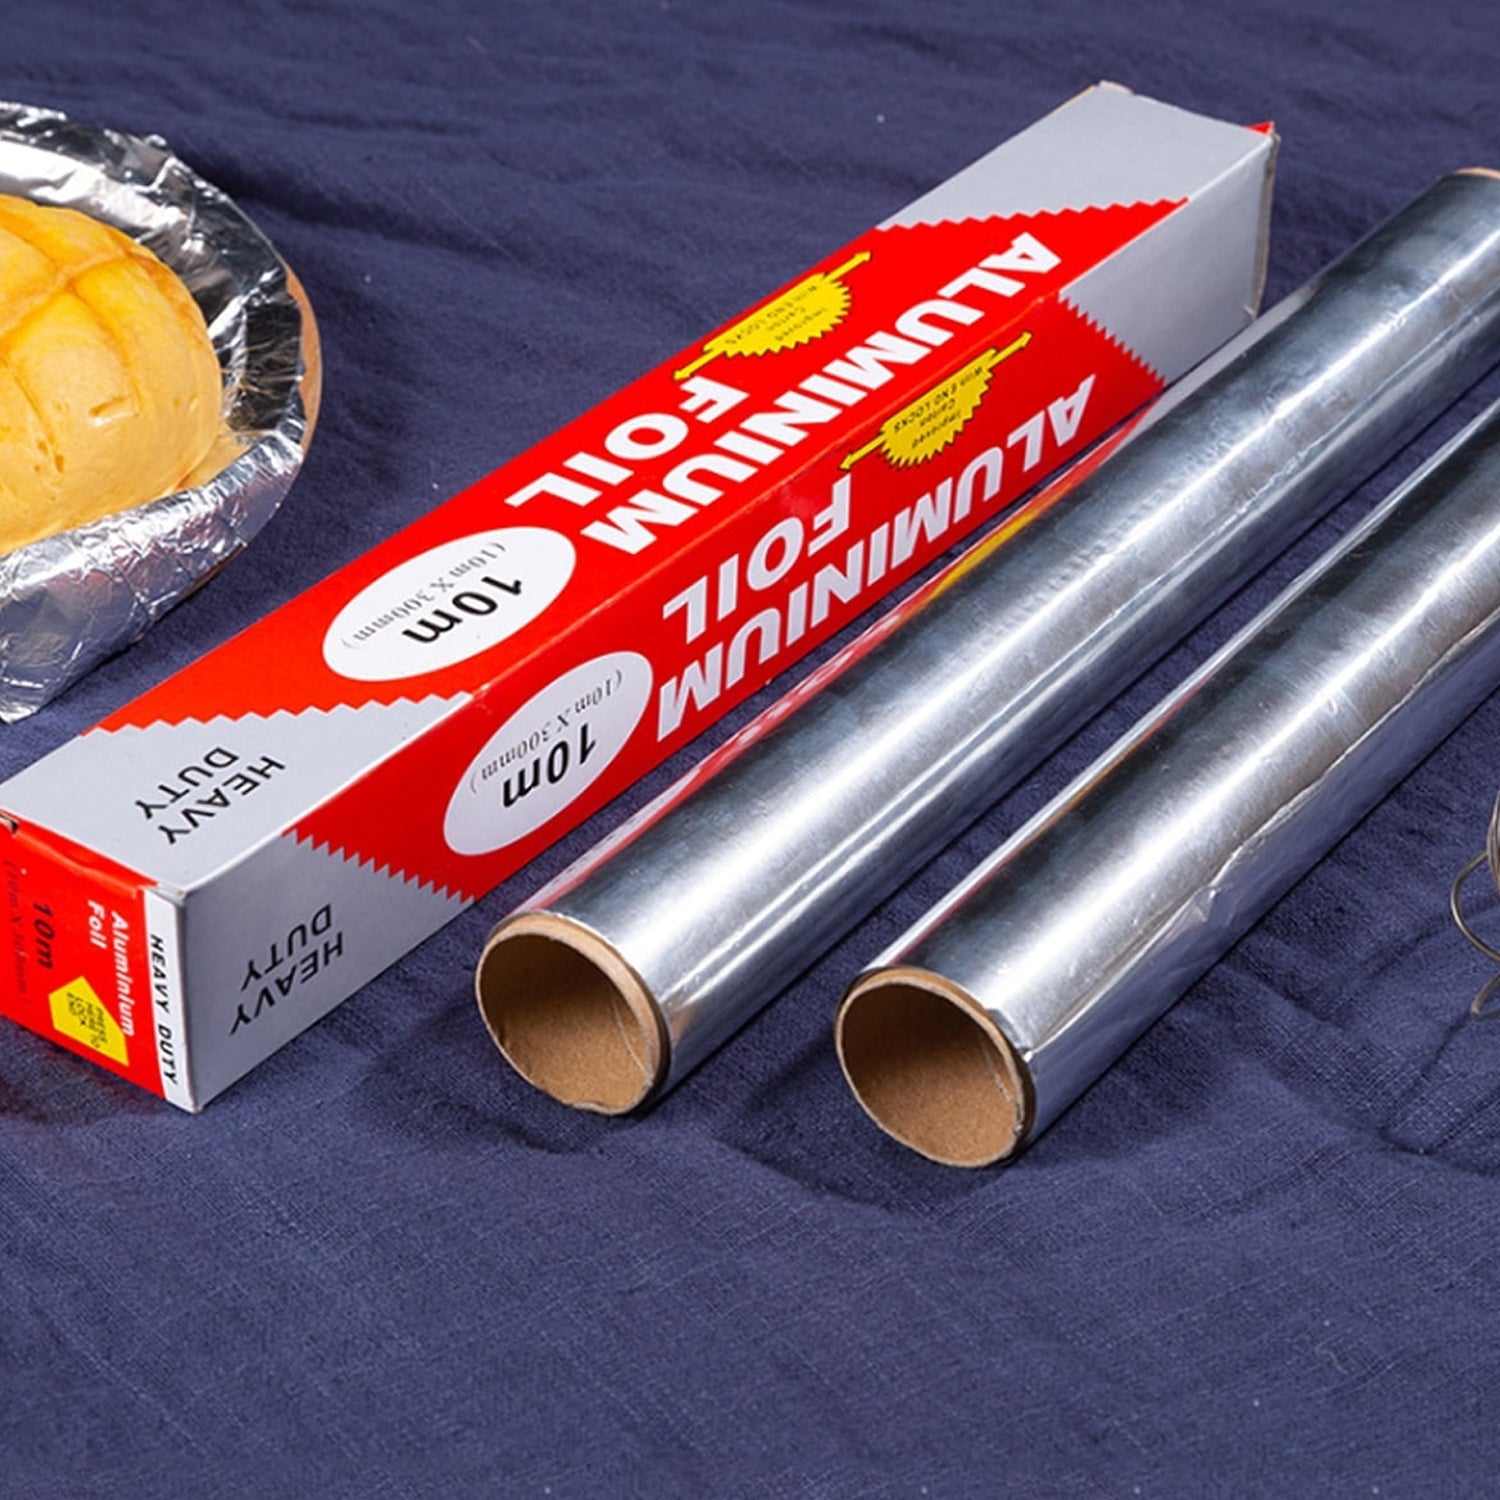 2329 Aluminum Foil Roll Heavy Duty Non Stick Thick Aluminum Foil Sheet Baking Grilling Tool (10mX300mm) DeoDap